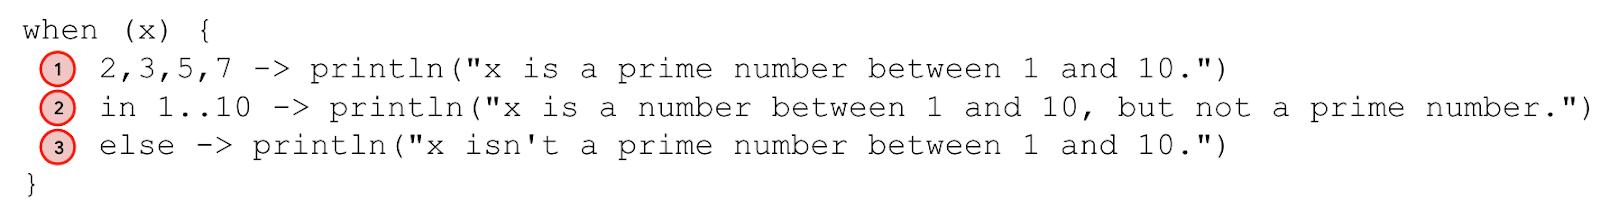 這張圖針對 when 陳述式提供註解說明。2,3,5,7 -> println("x is a prime number between 1 and 10.") 行加註為案例 1。in 1..10 -> println("x is a number between 1 and 10, but not a prime number.") 行加註為案例 2。else -> println("x isn't a prime number between 1 and 10.") 行加註為案例 3。